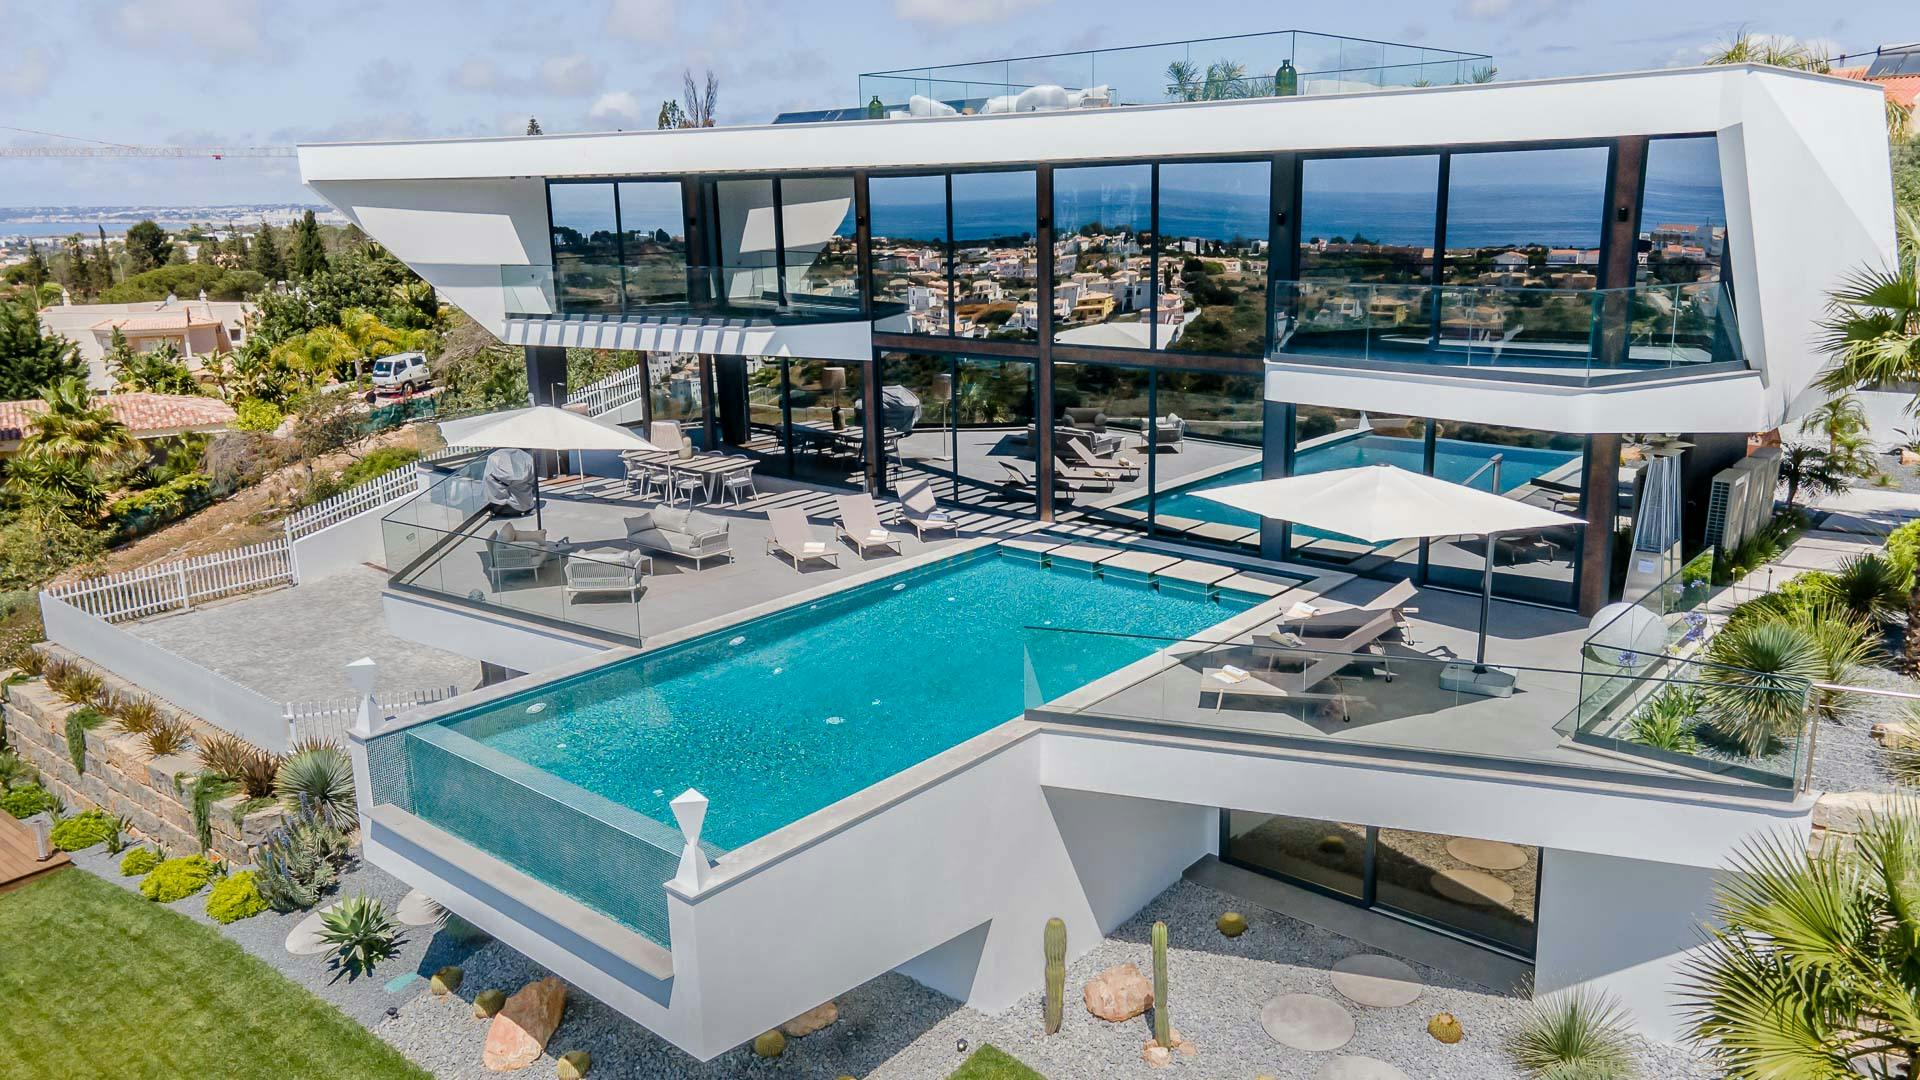 listing-64b6d9b17fe9f4eccf020776-Luxury Villa with Infinity Pool in the Algarve